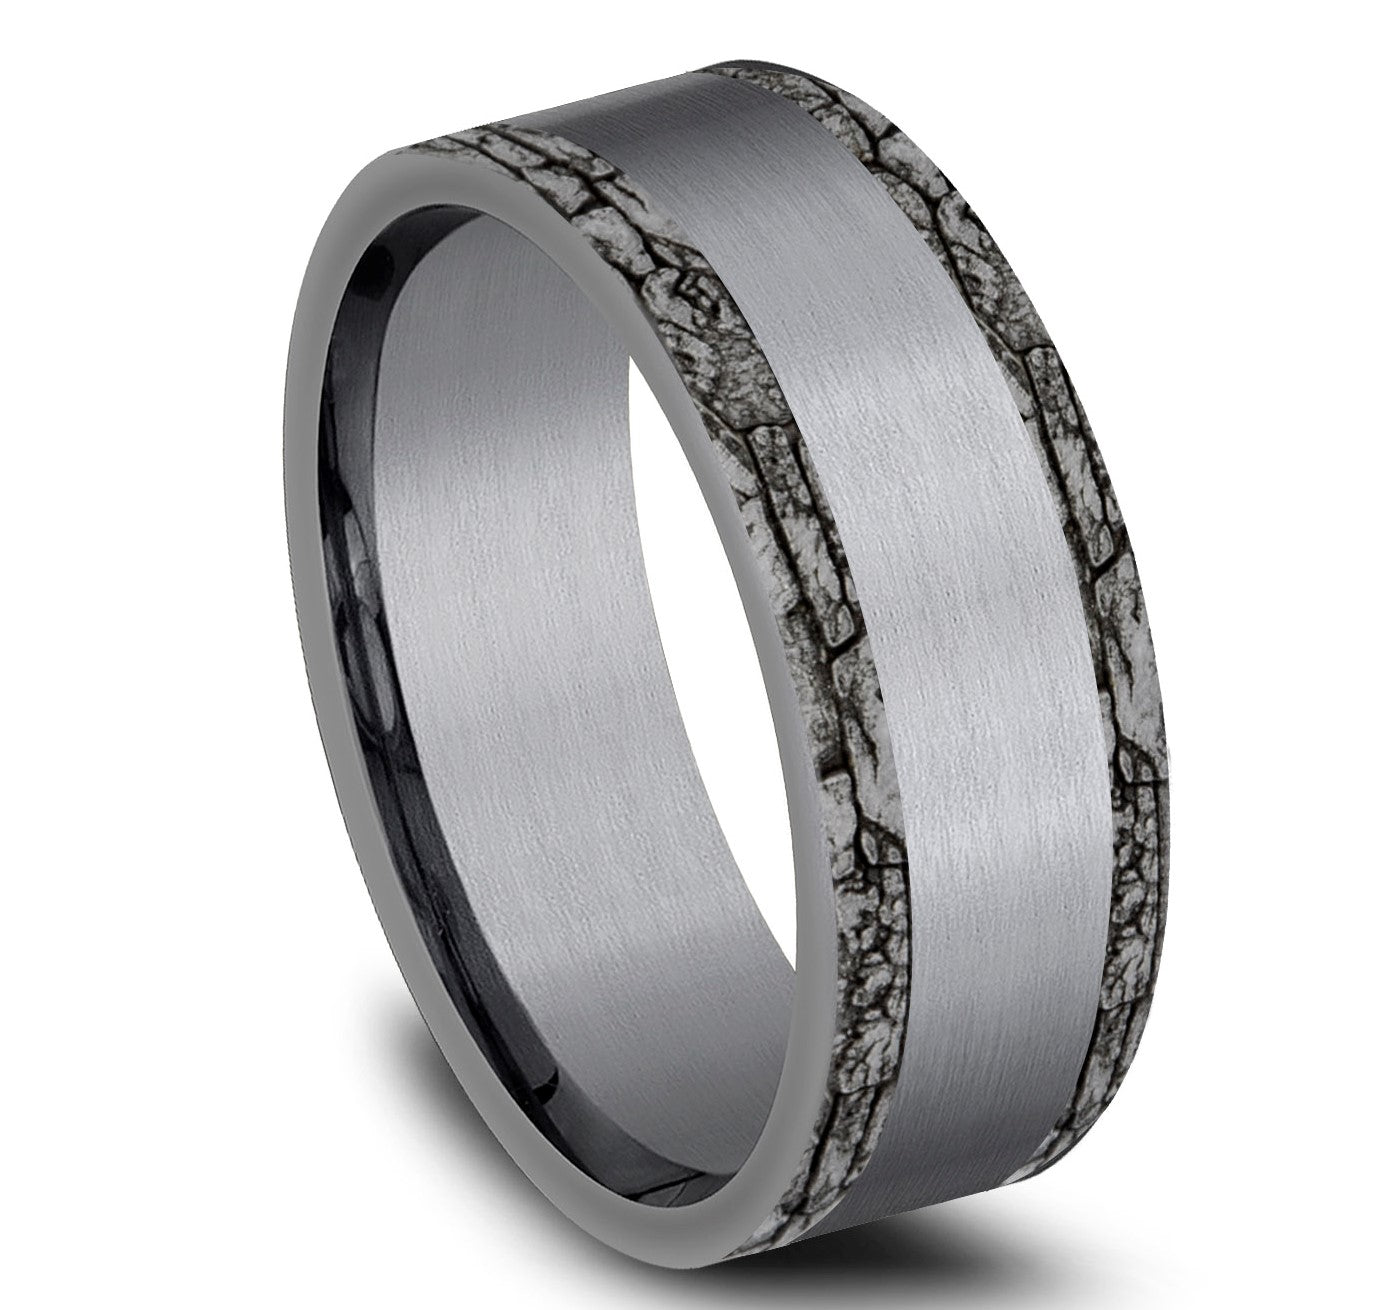 Hammered Effect Titanium Wedding Ring - The Rivelin Valley – Flinn And Steel